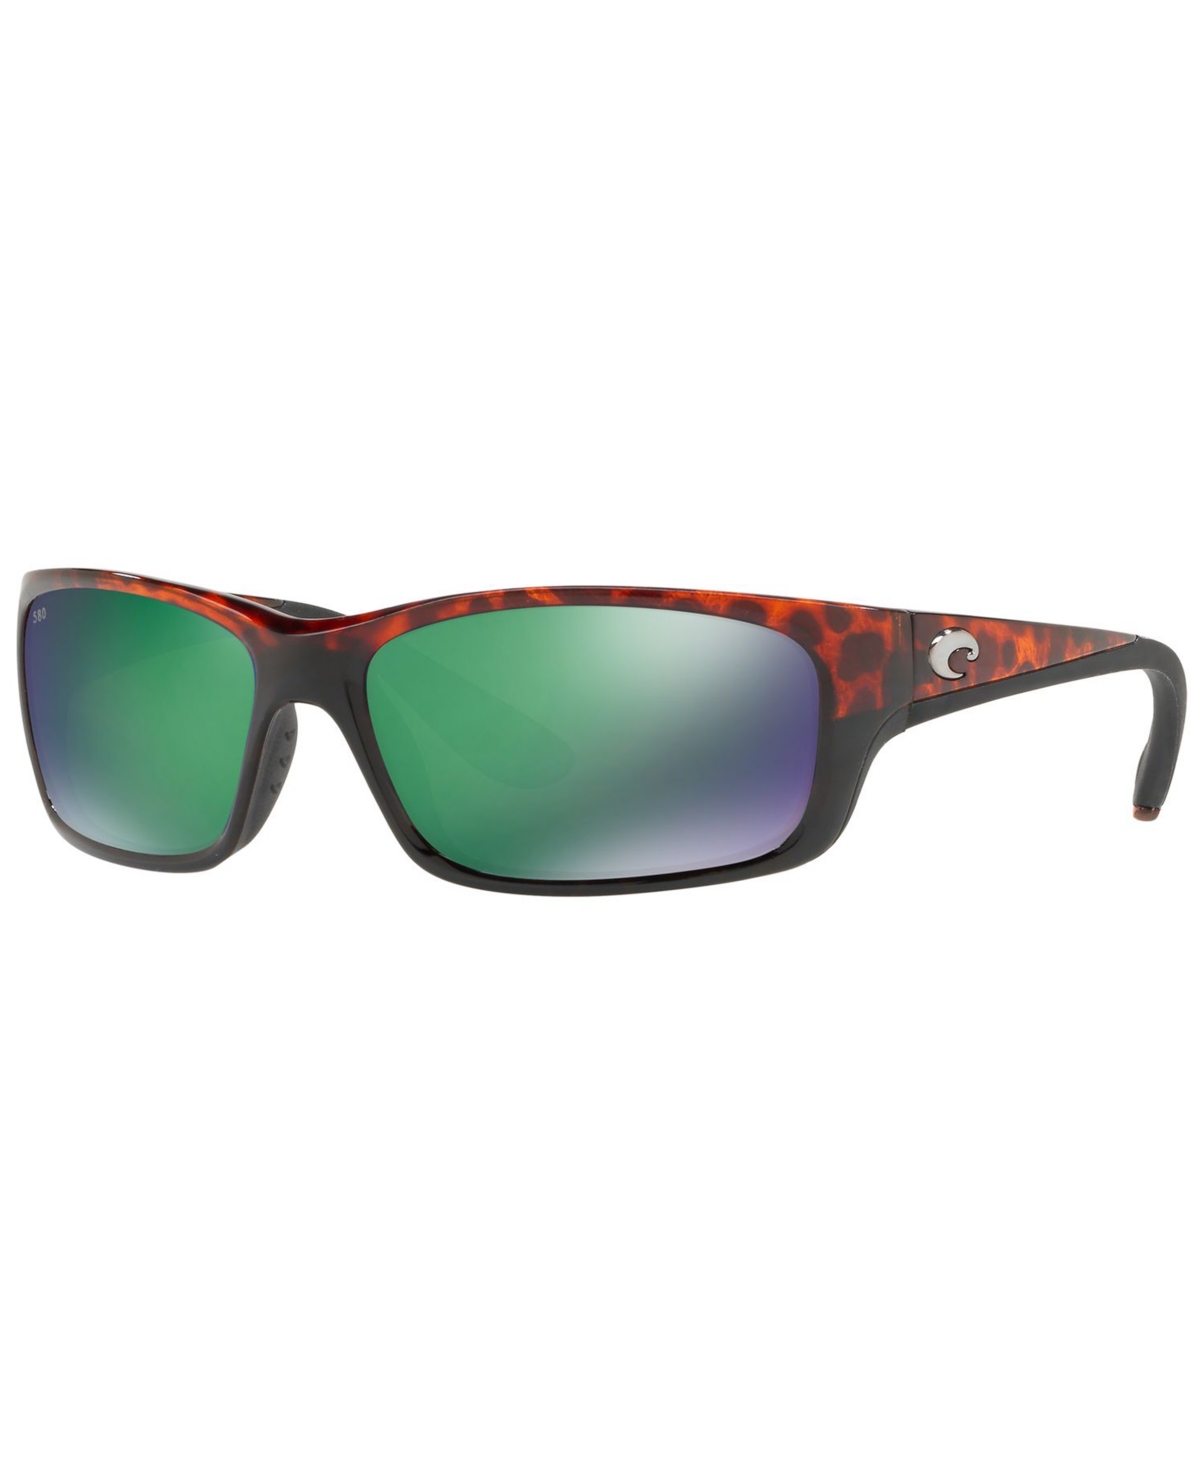 Polarized Sunglasses, Jose 61P - TORTOISE/GREEN POLAR